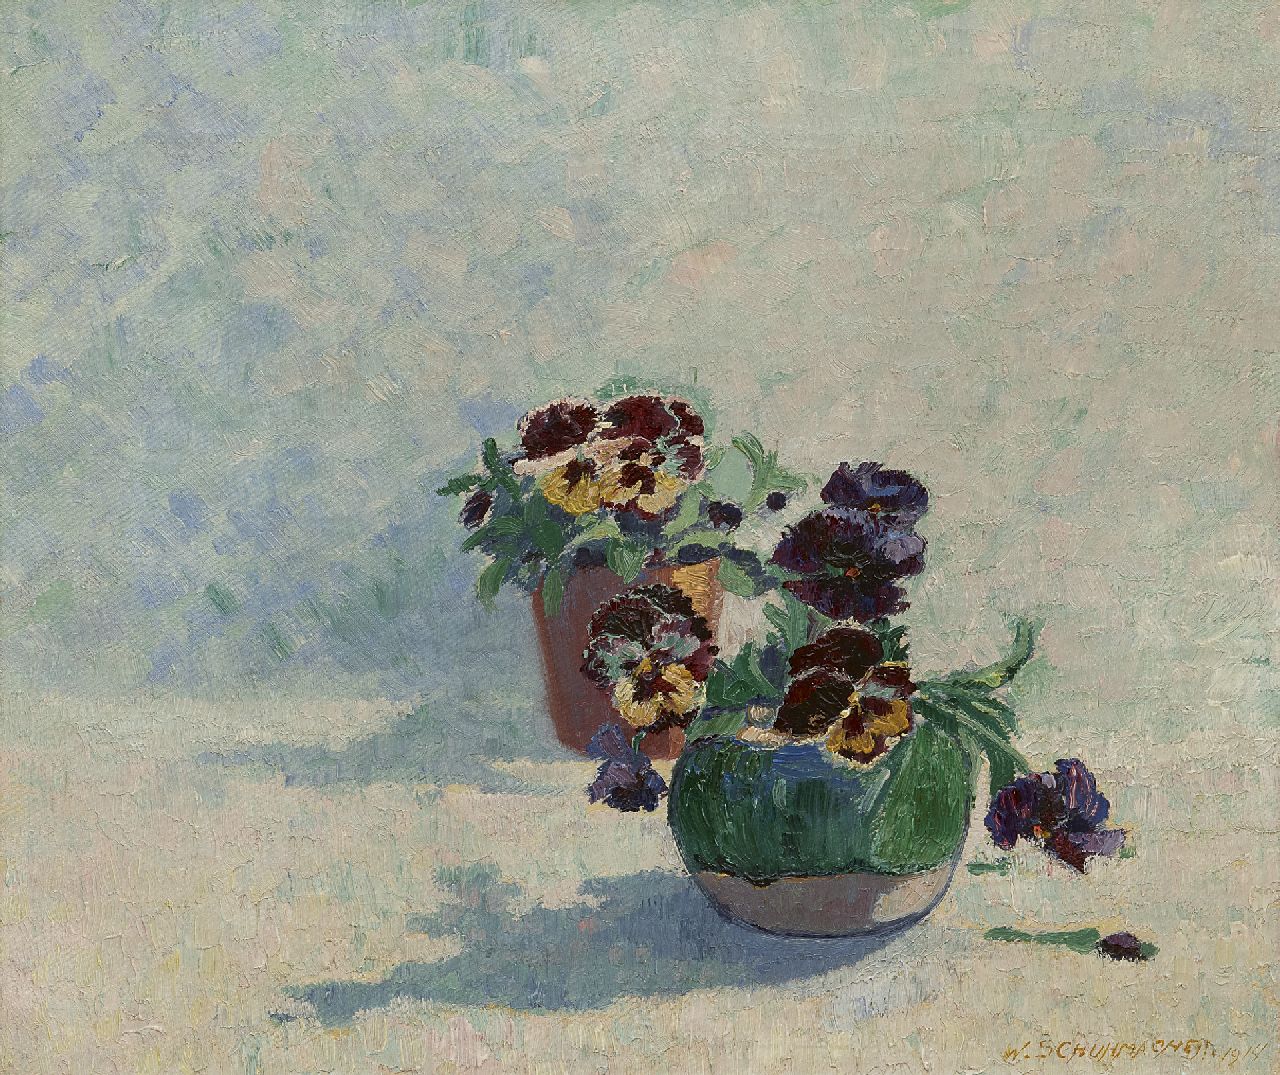 Schuhmacher W.G.C.  | Wijtze Gerrit Carel 'Wim' Schuhmacher | Paintings offered for sale | Ginger jar with violets, oil on canvas 34.5 x 40.3 cm, signed l.r. and dated 1914